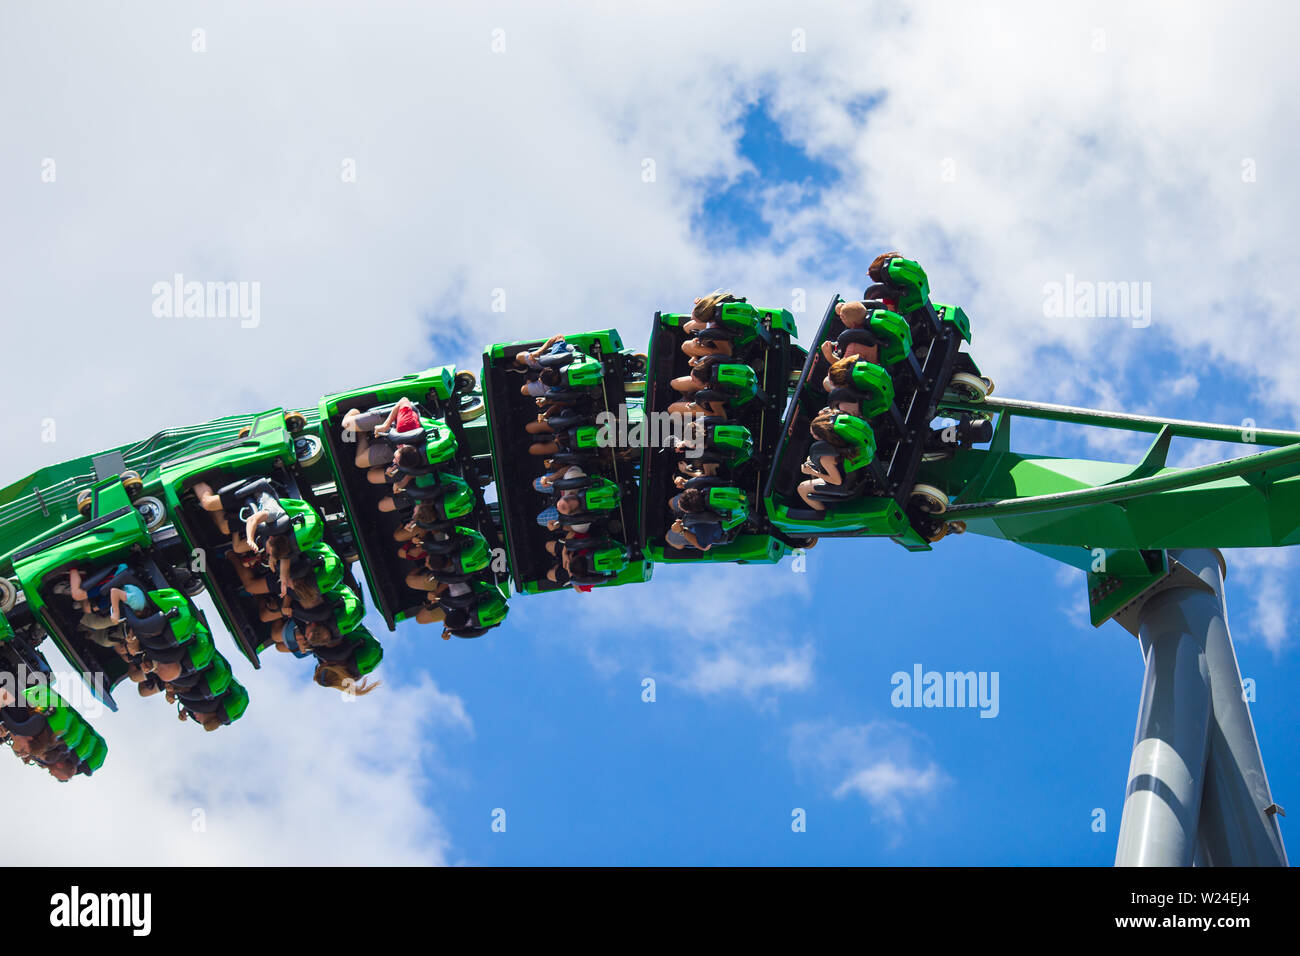 L'Incroyable Hulk Coaster. Universal Studios. Universal's Islands of Adventure. D'Orlando. La Floride. USA Banque D'Images